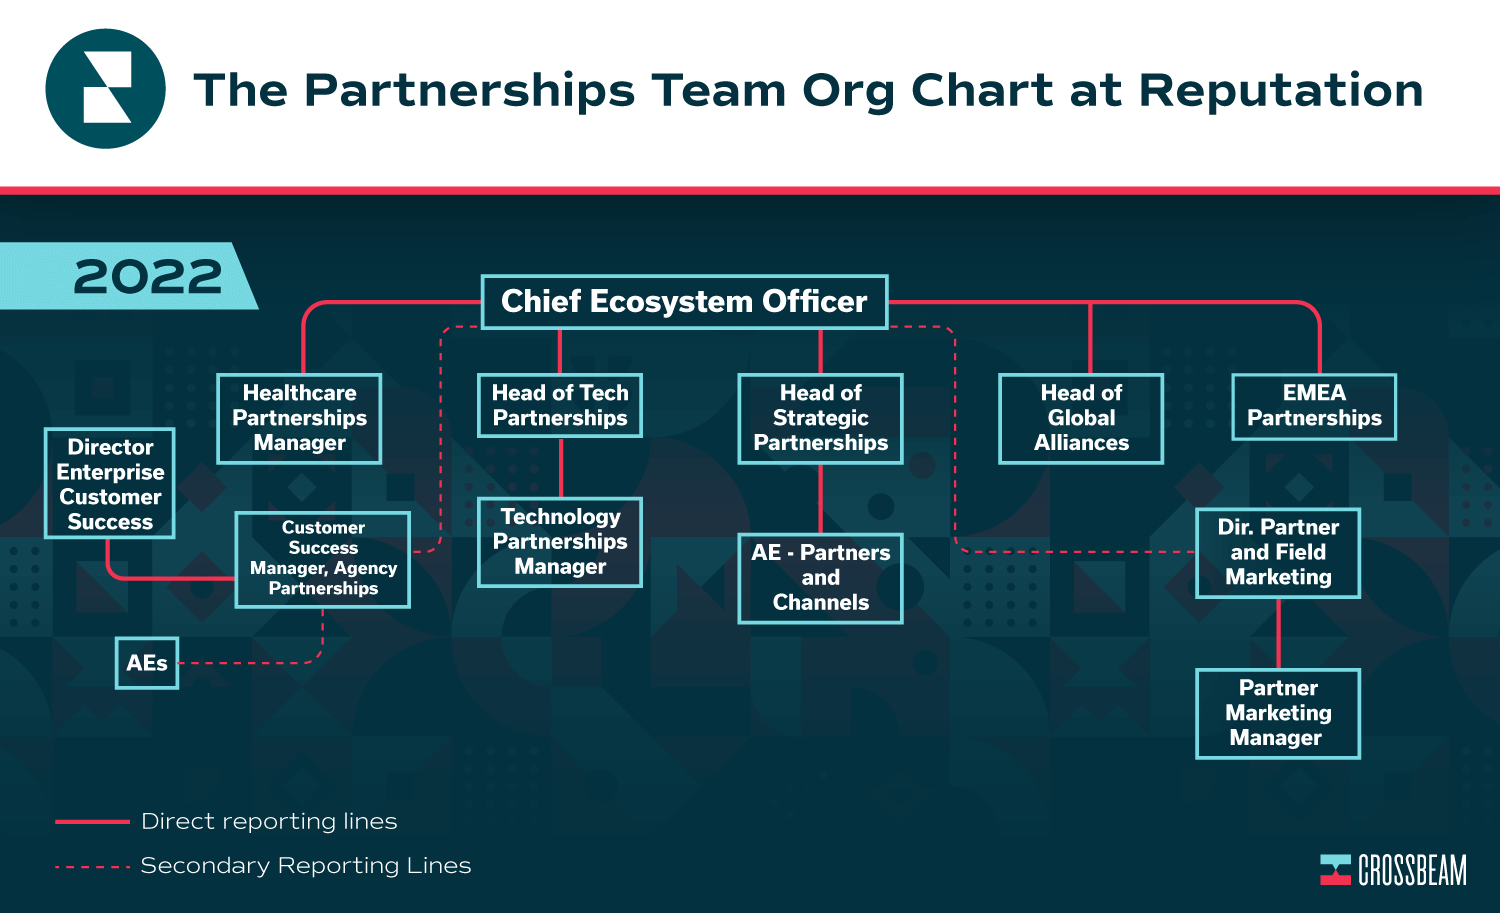 crossbeam-partnerships-team-org-charts-reputation